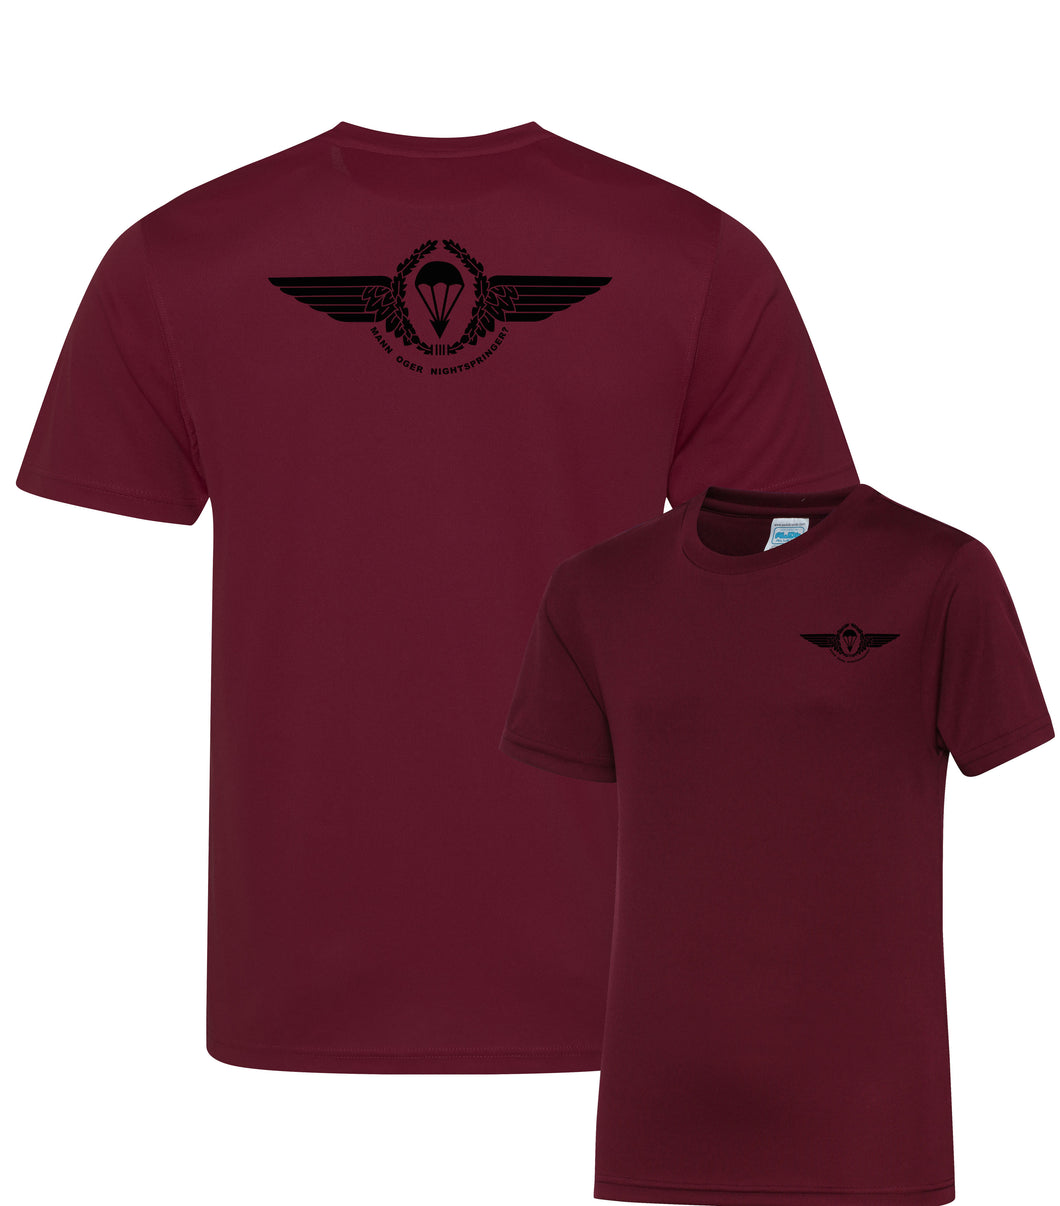 (German) Fallschirmjäger Wings Airborne forces Paratrooper - Fully Printed Wicking Fabric T-shirt